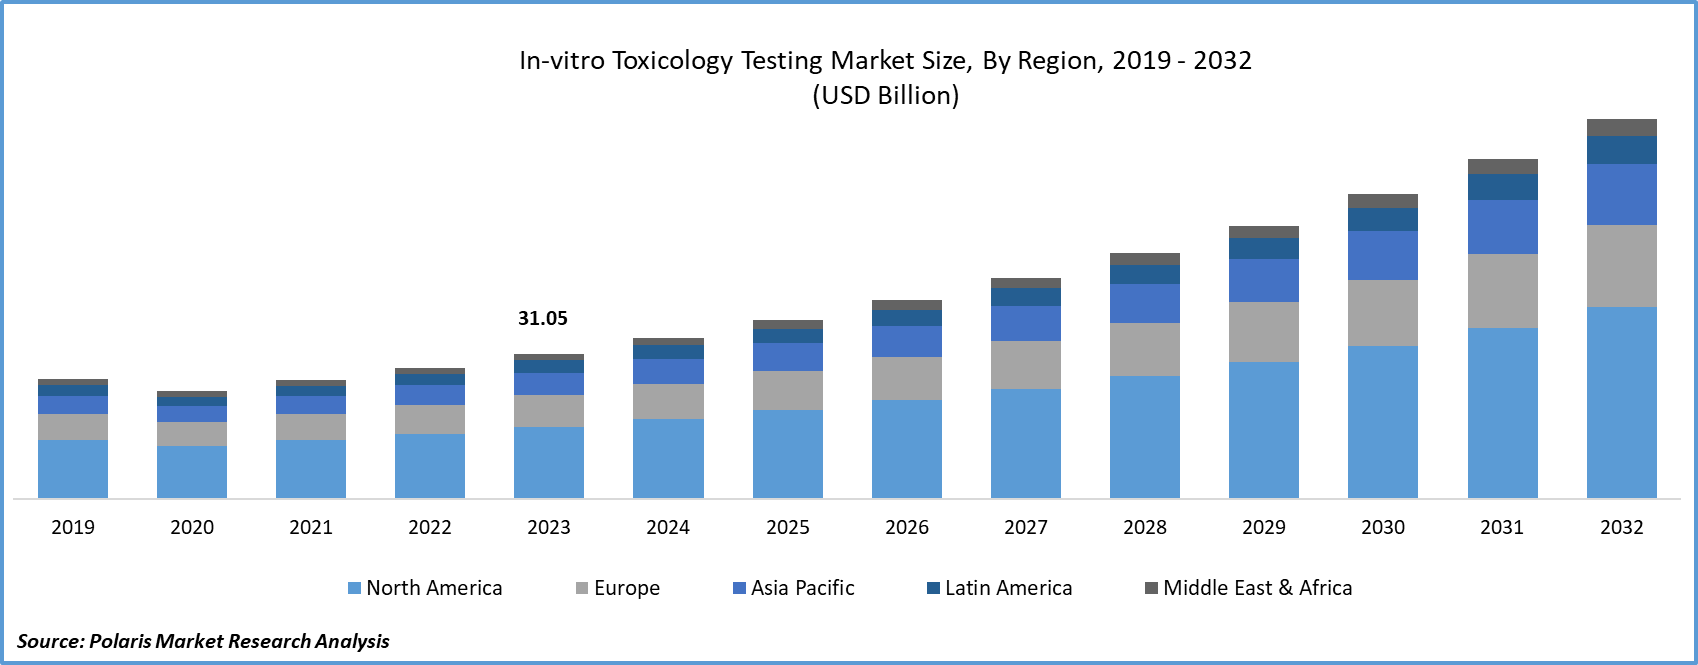 In-vitro Toxicology Testing Market Size